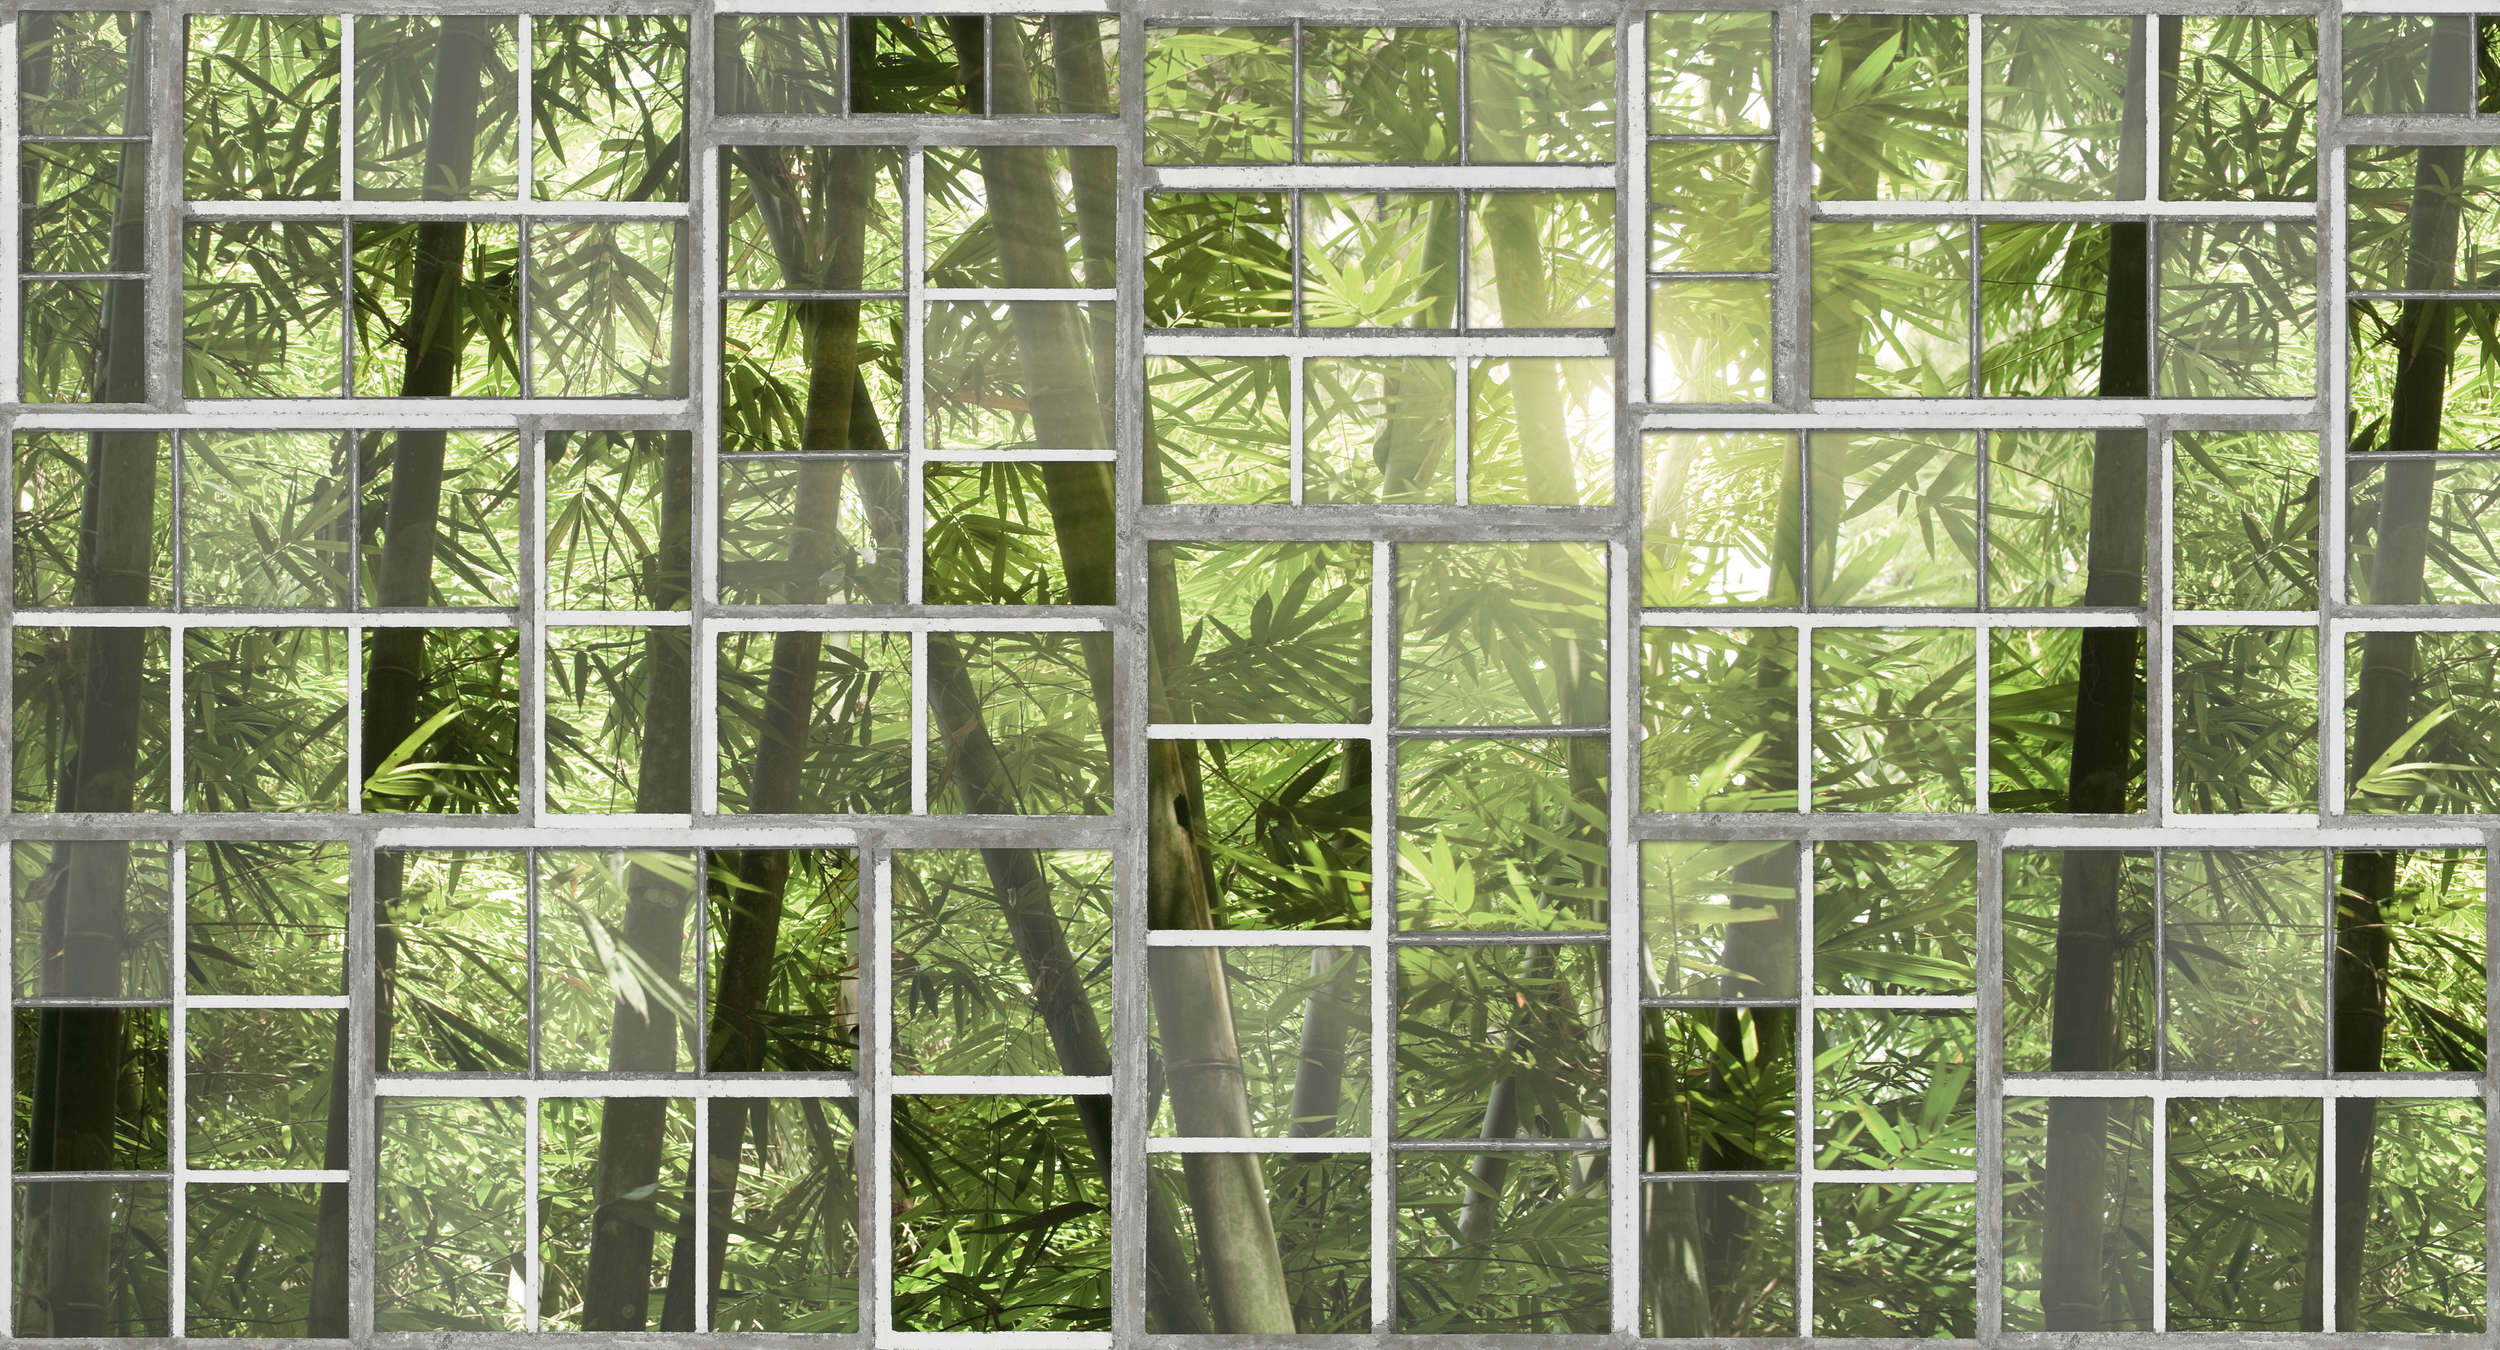             Mural de pared Ventana con vista a la selva, aspecto retro - Verde, Gris, Blanco
        